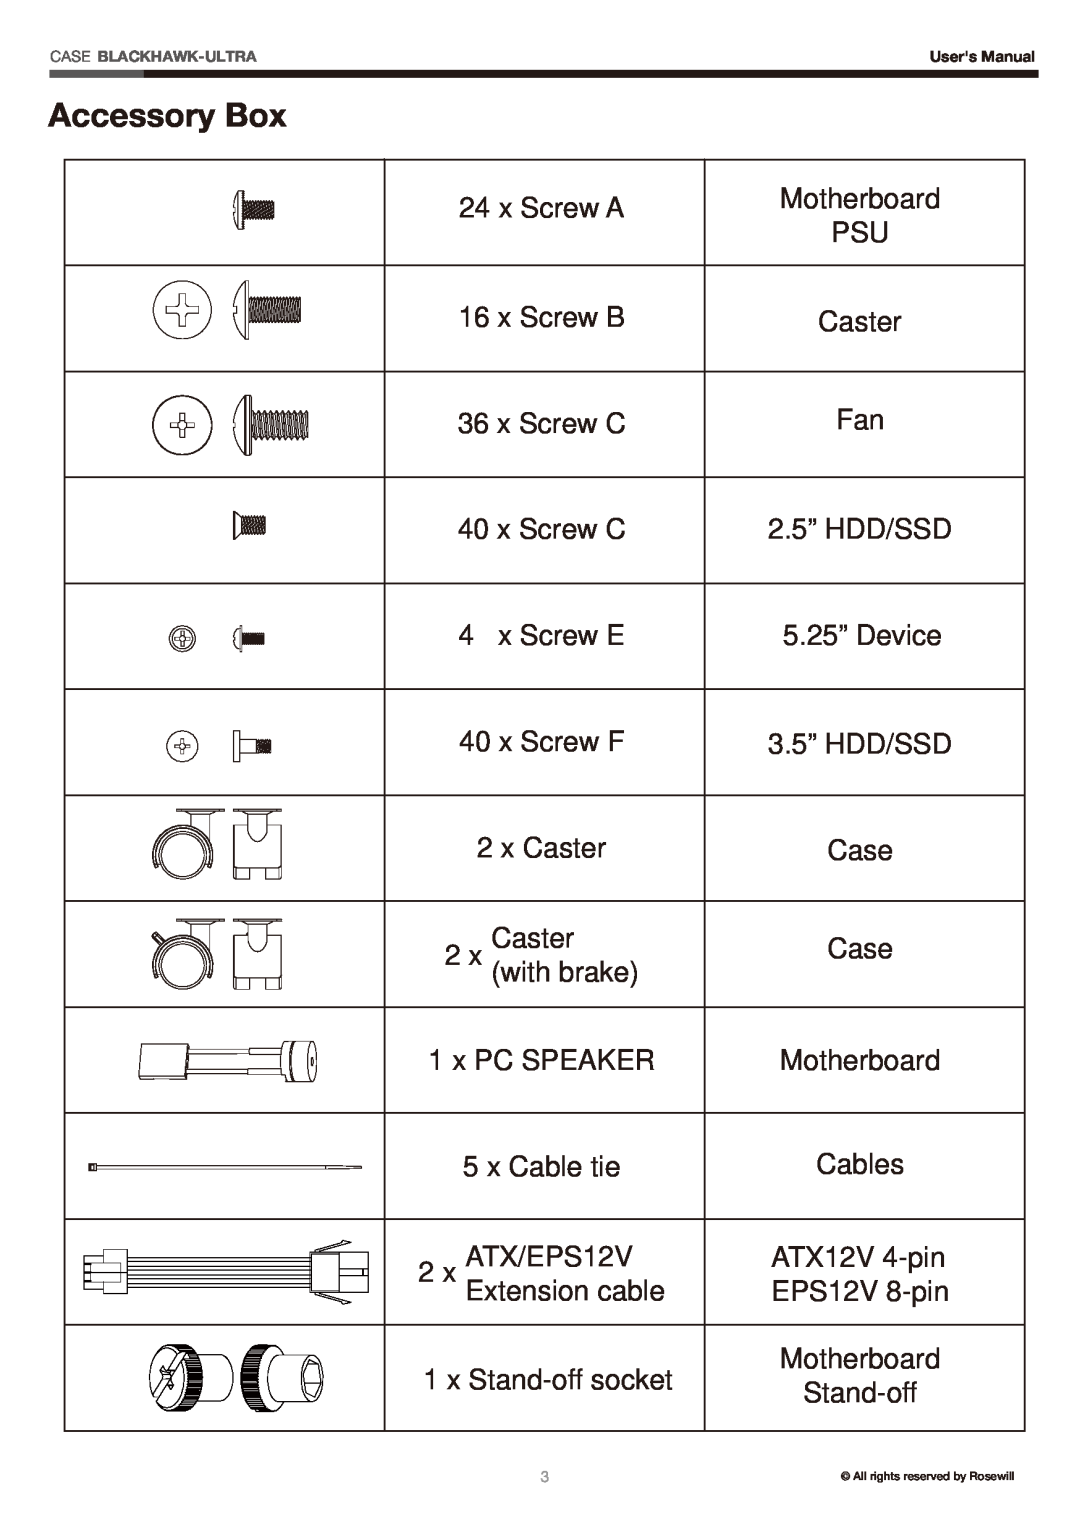 Rosewill BLACKHAWK manual Accessory Box, x Screw A, Caster, x Screw C, 2.5” HDD/SSD, x Screw F, 3.5” HDD/SSD, x PC SPEAKER 